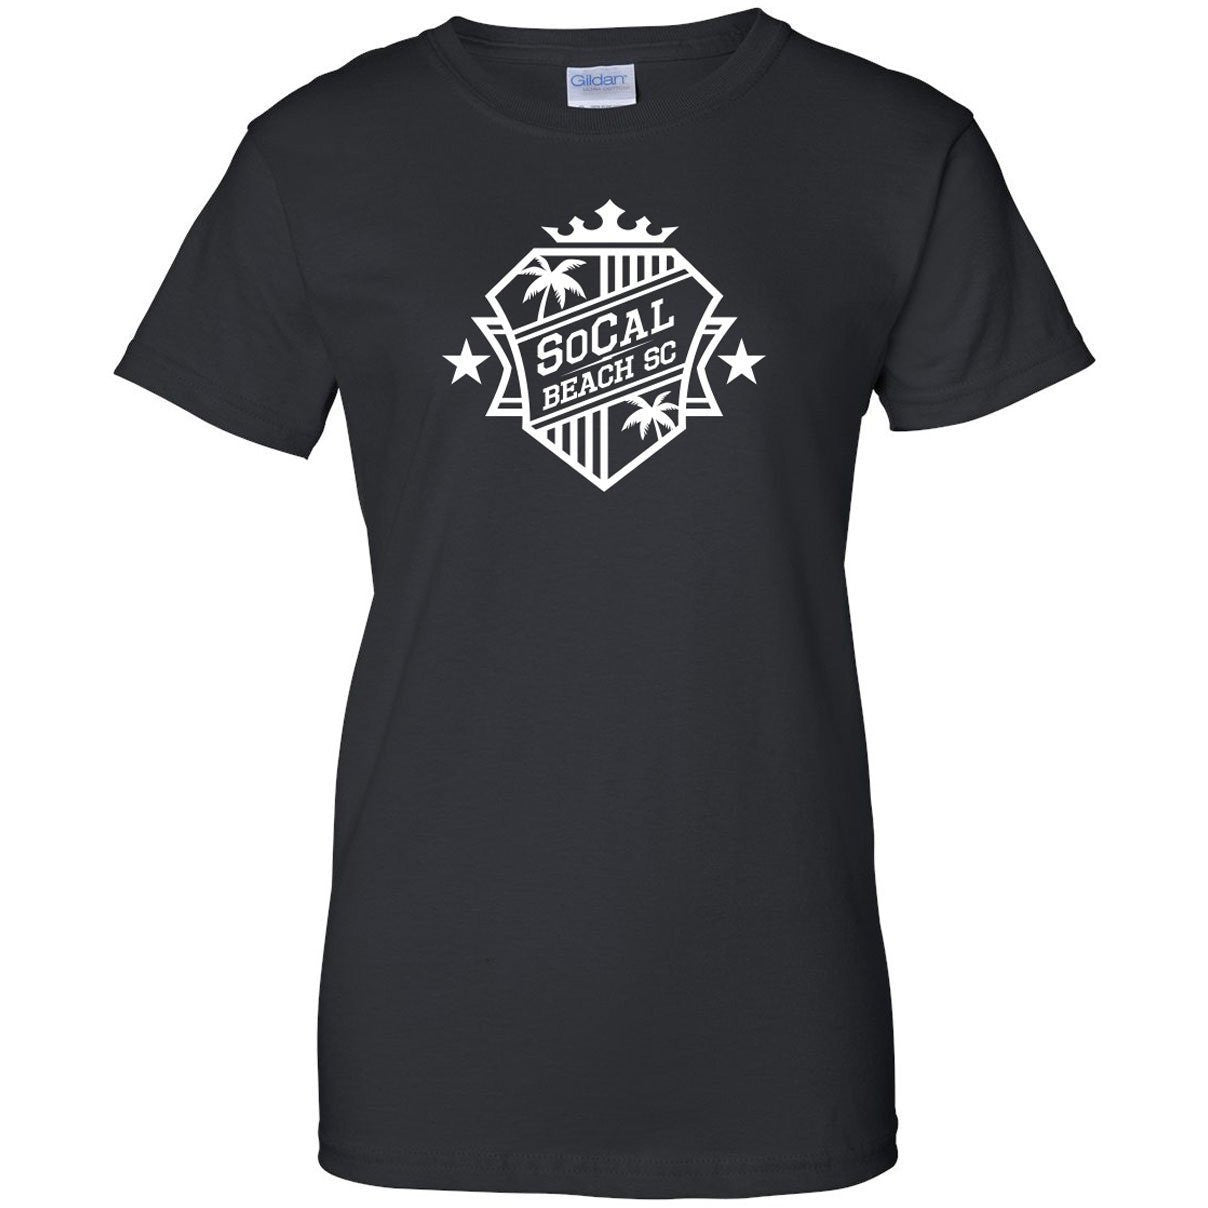 100% Cotton SoCal Legacy BFC Women's Team Spirit T-Shirt